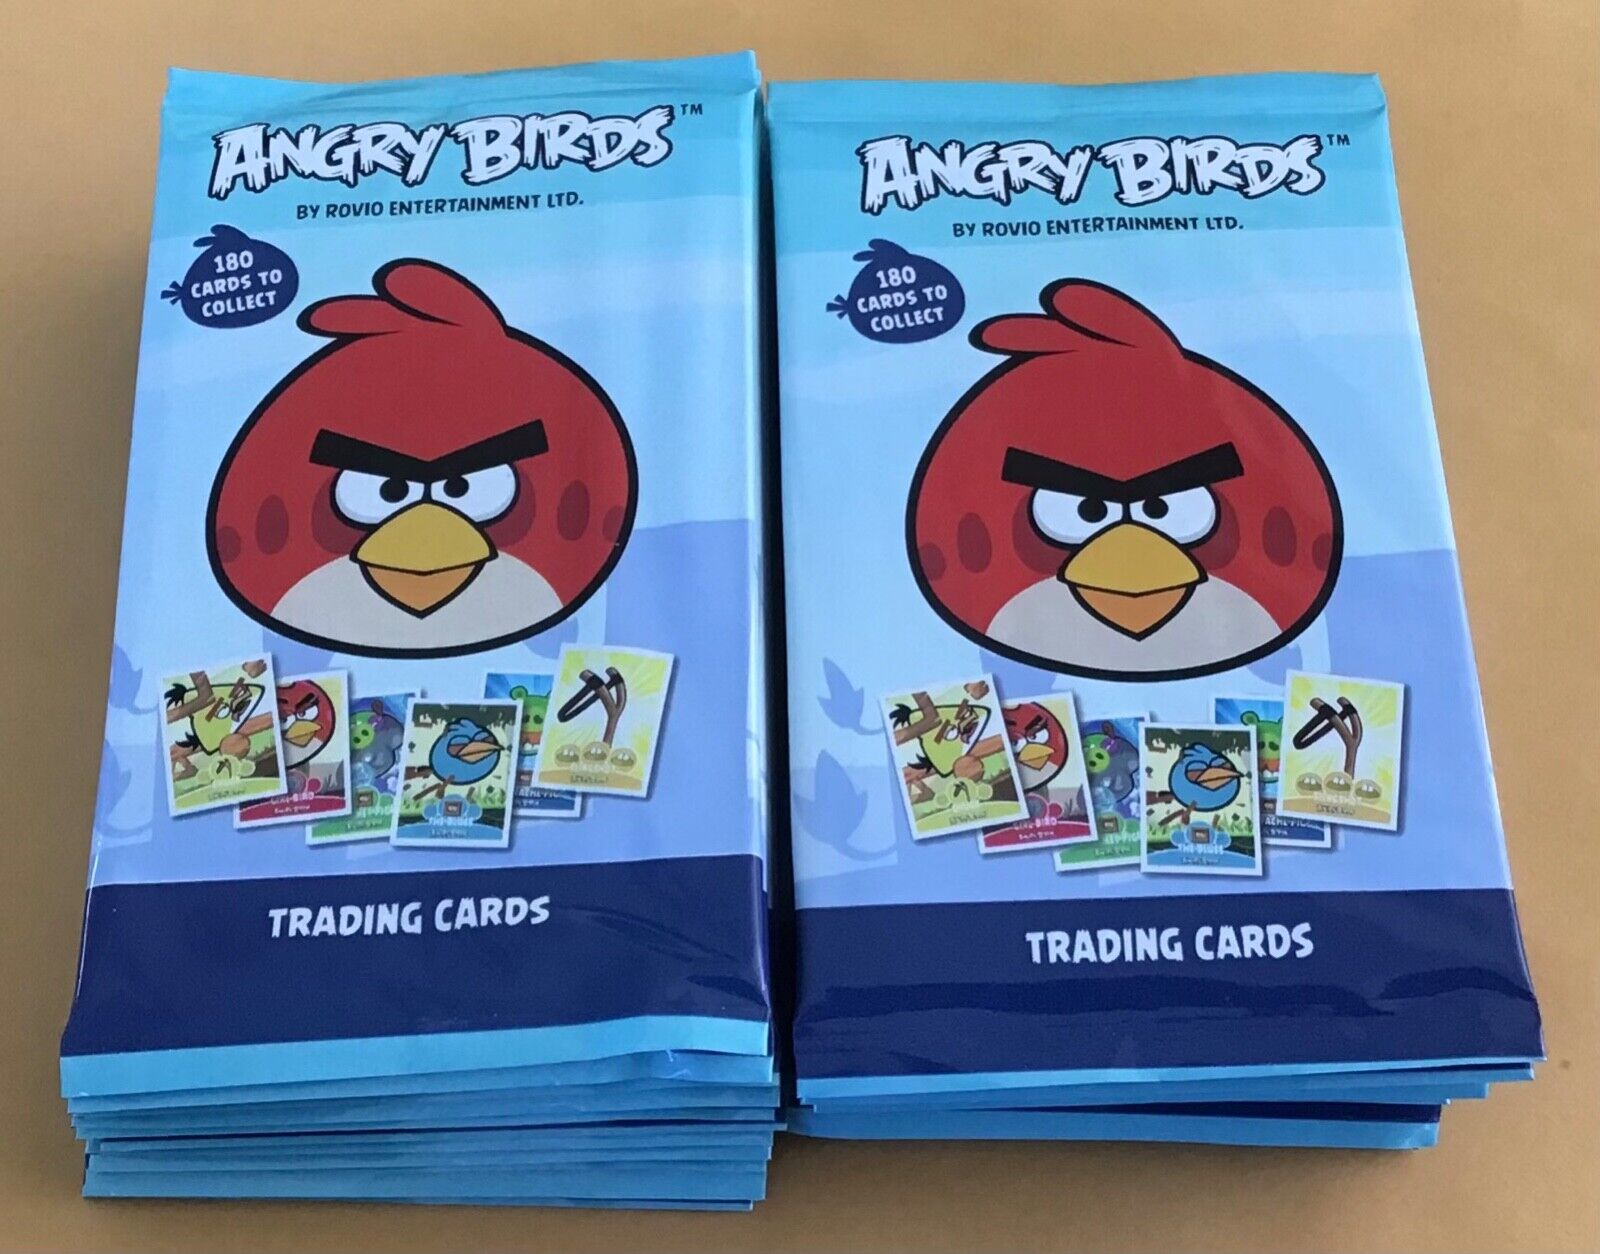 Lot of 130 2012 Rovio Entertainment Angry Birds Trading Card Wax Packs